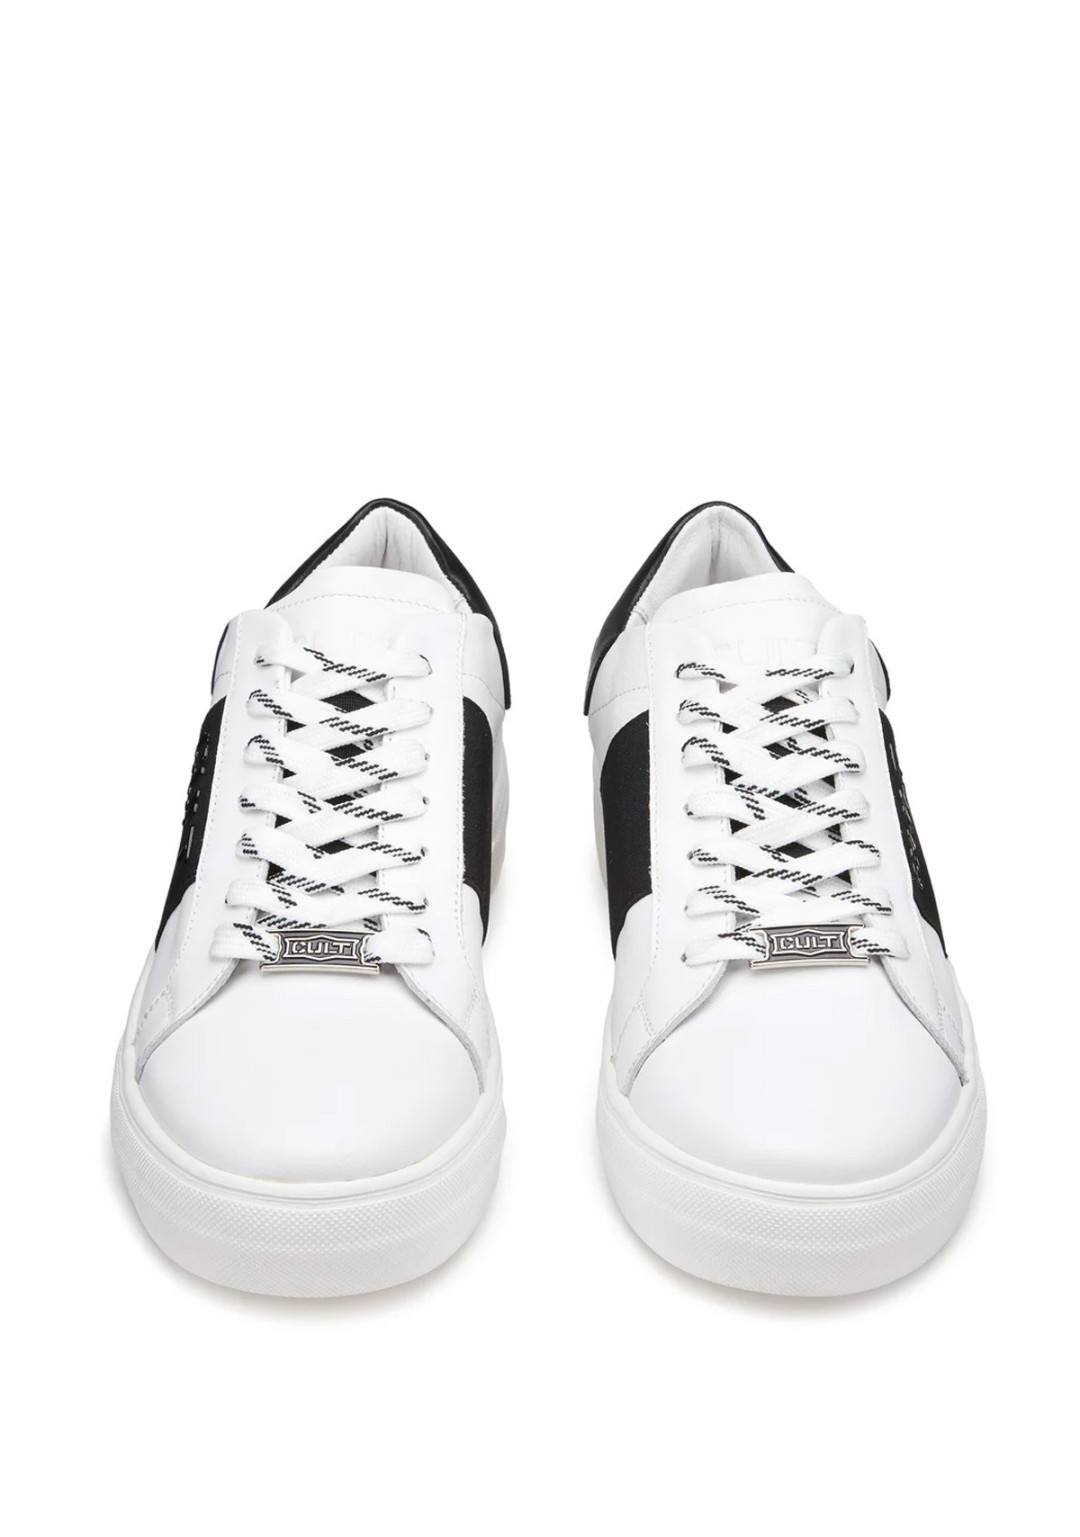 Cult - Sneakers Fascia - Uomo - CLM363701